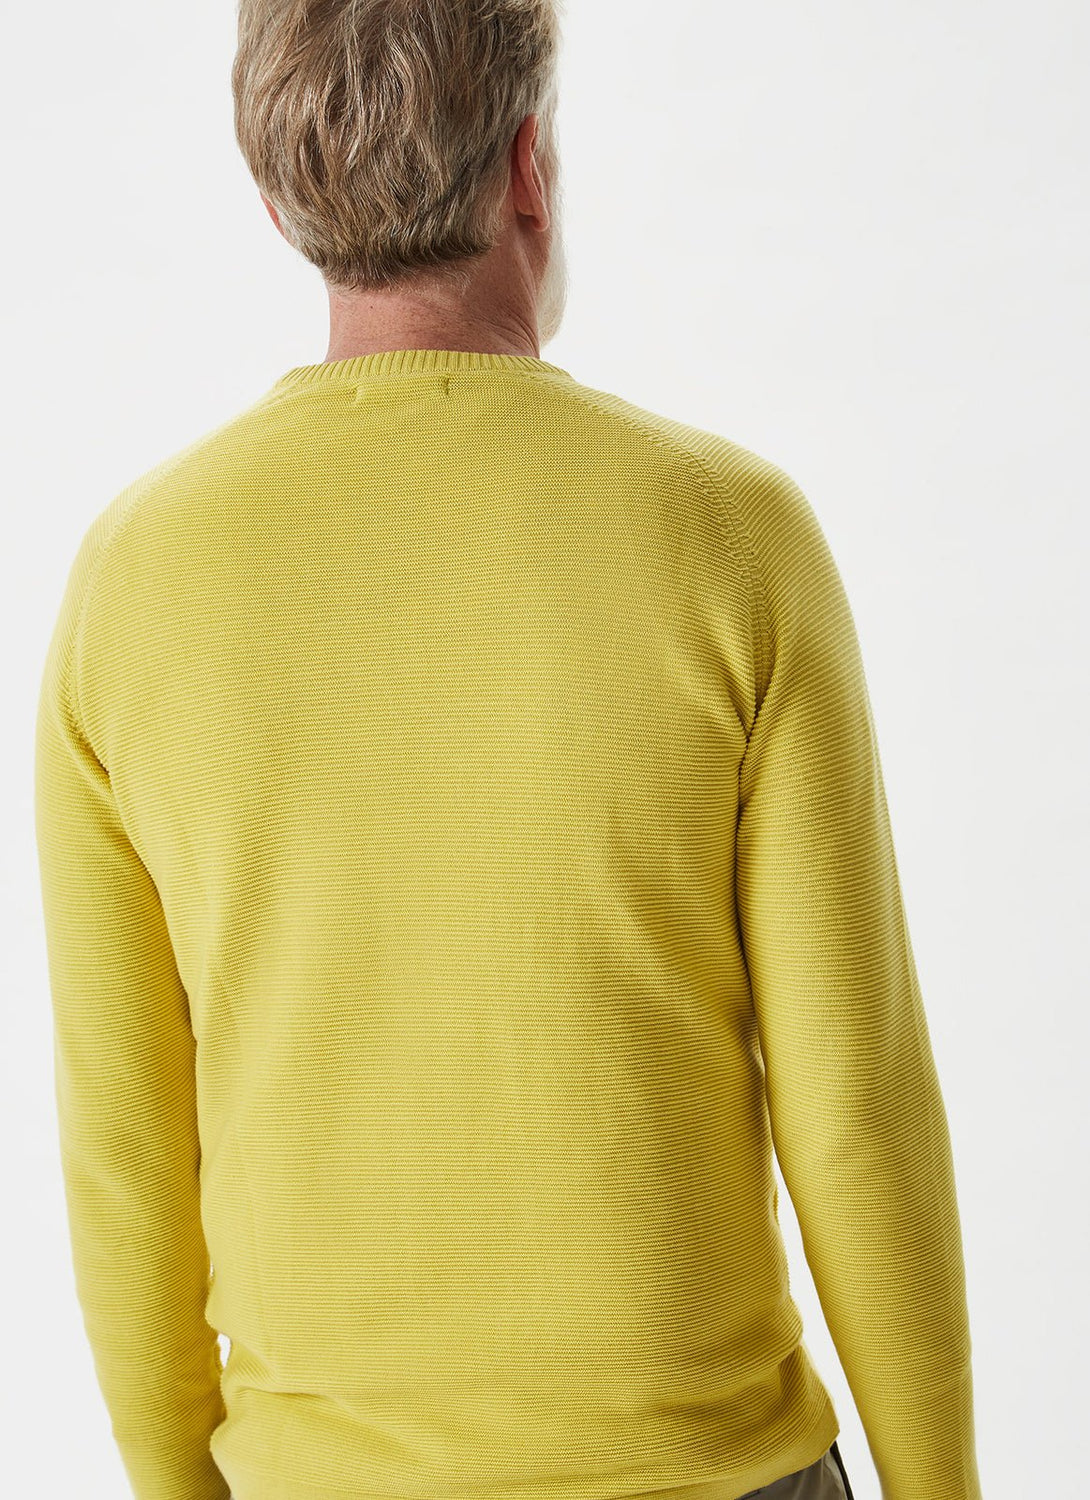 Men Jersey | Yellow Crew Neck Sweater With Raglan Sleeve by Spanish designer Adolfo Dominguez